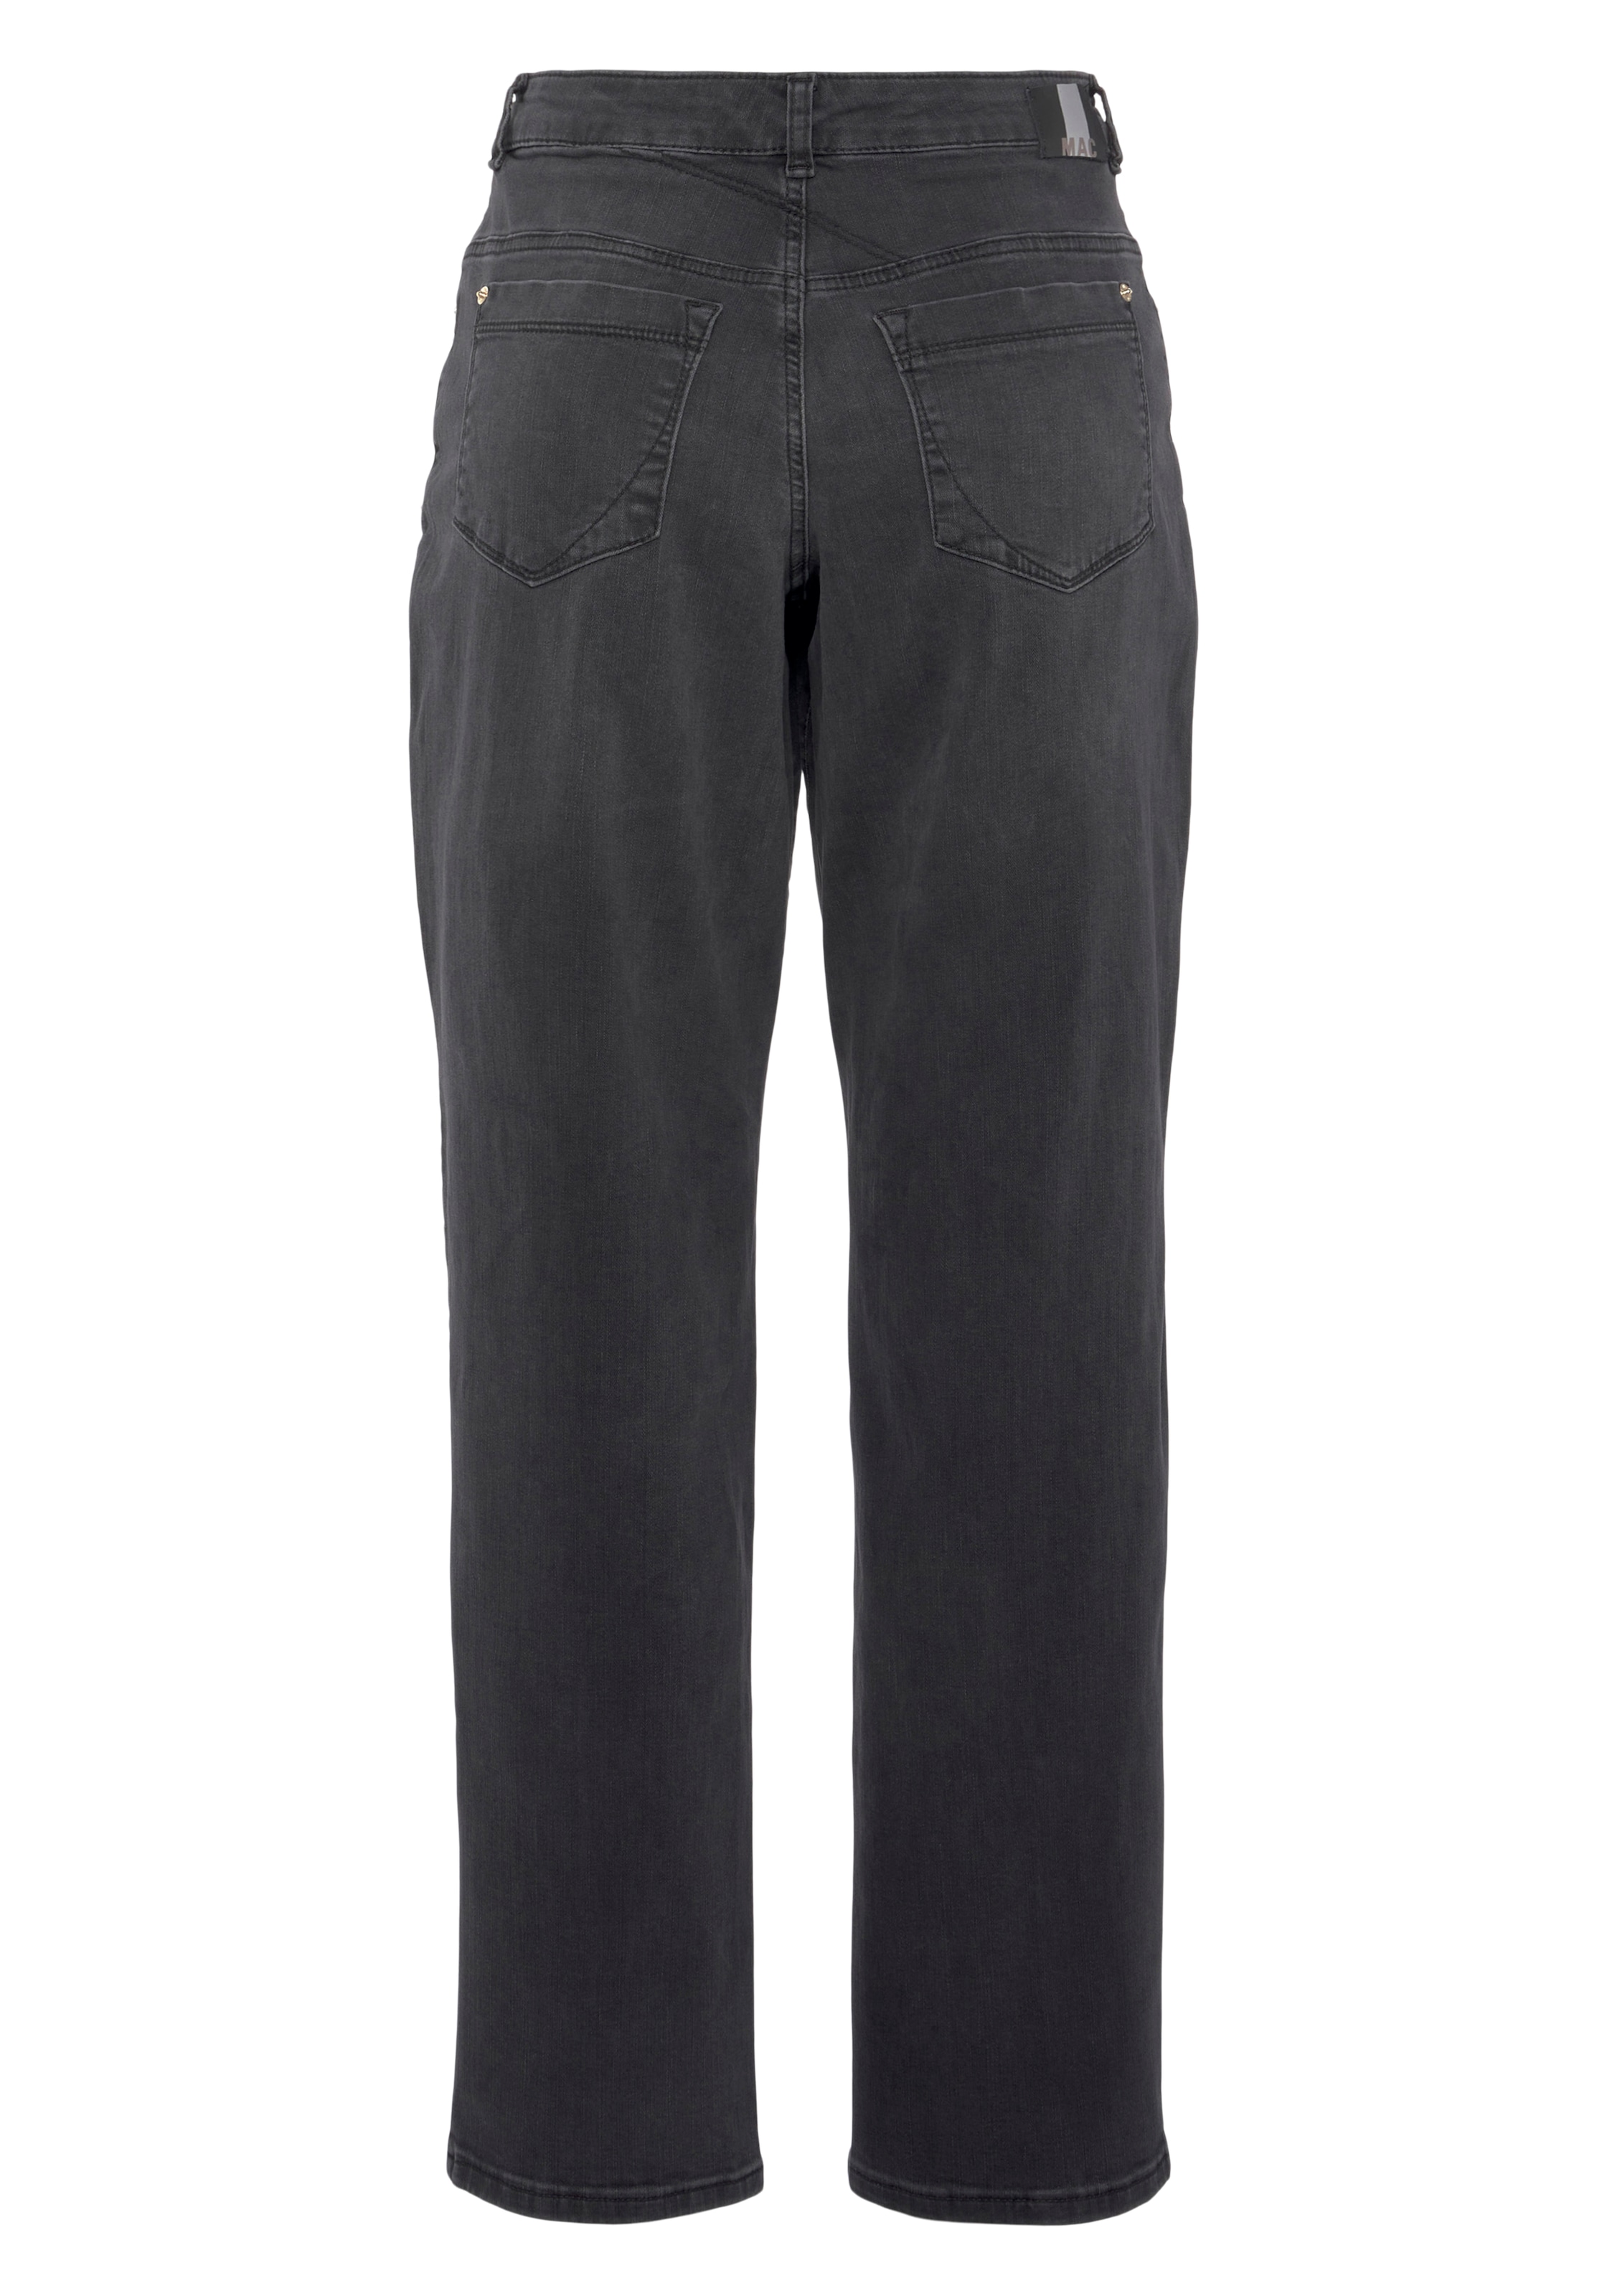 Jeans MAC OTTOversand fit »Gracia«, bei Passform feminine Bequeme